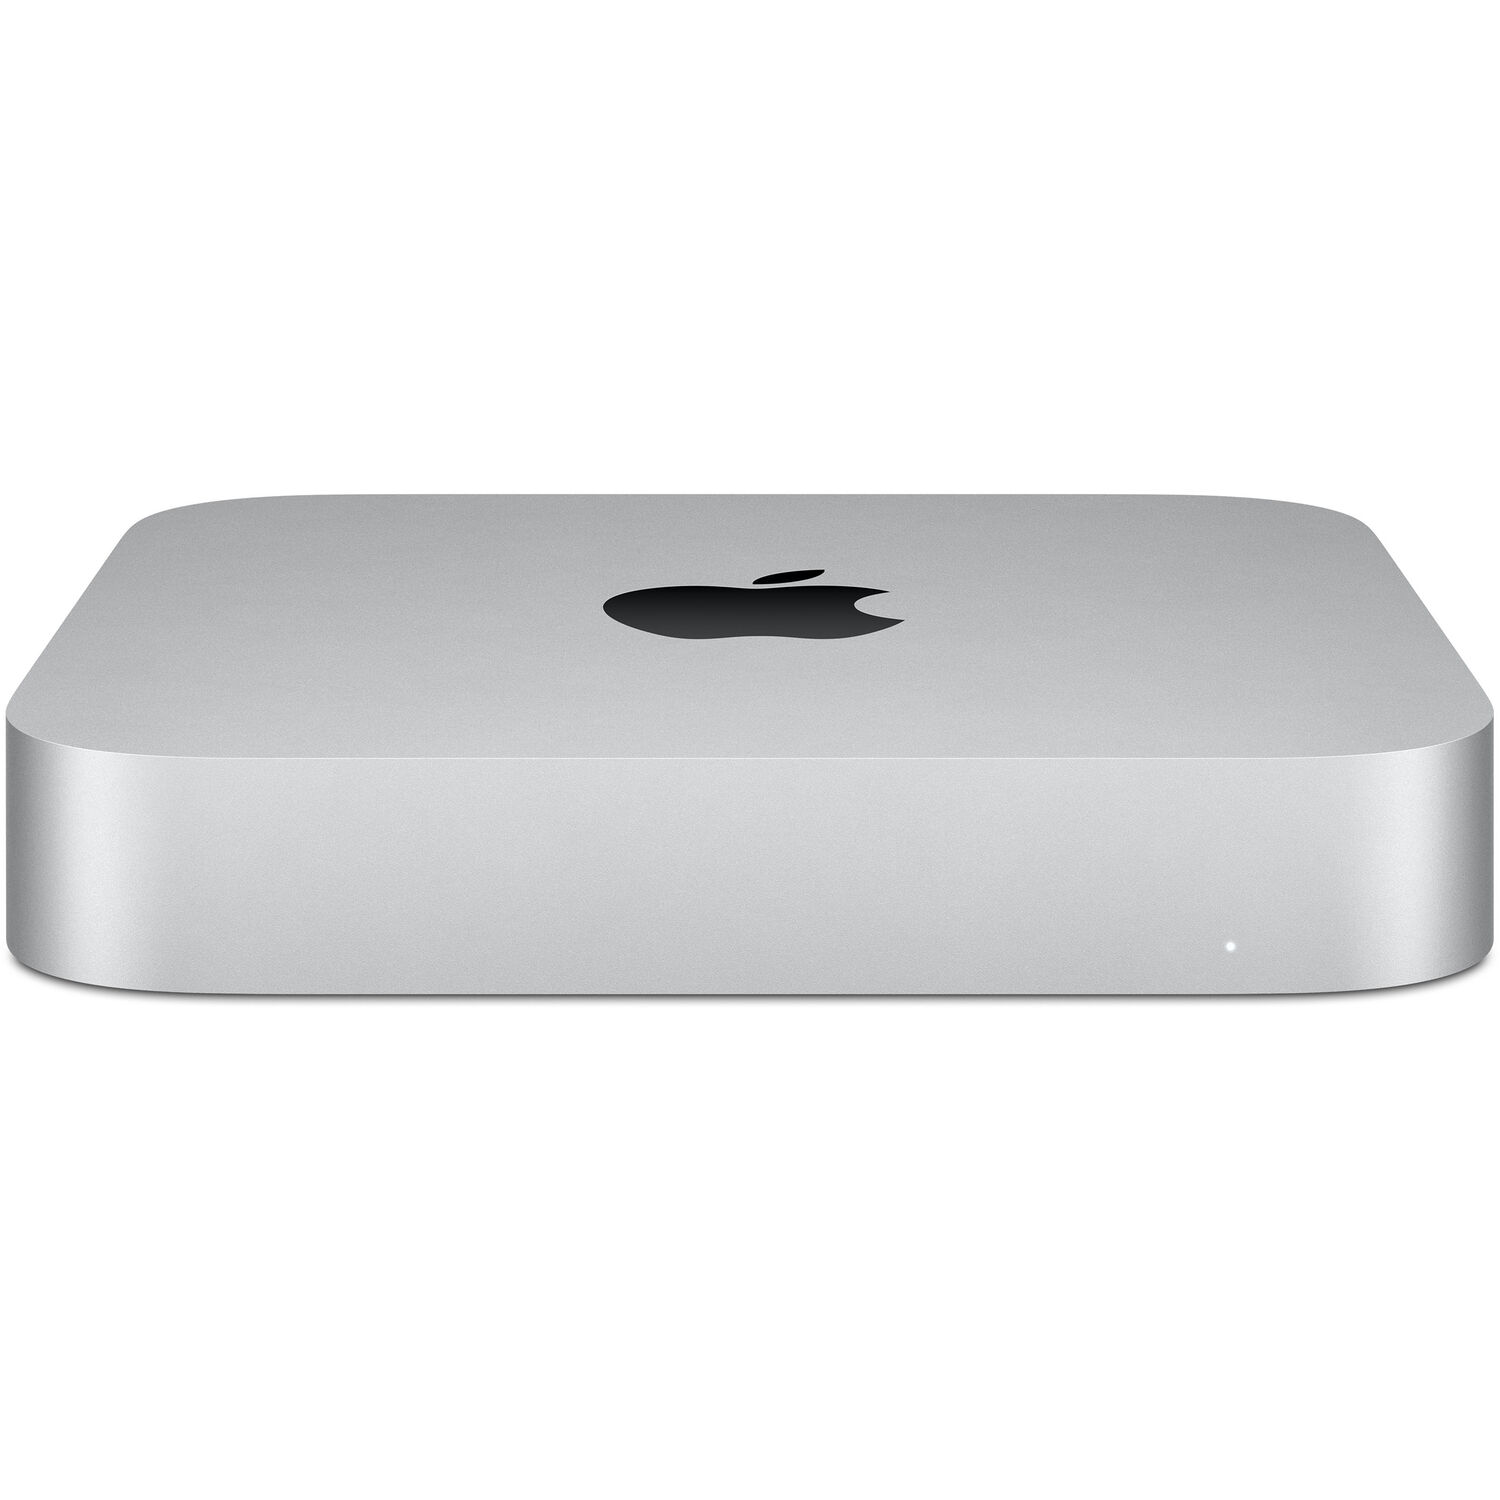 Ordenador de Escritorio Apple Mac Mini con Procesador M1 Chip Late 2020